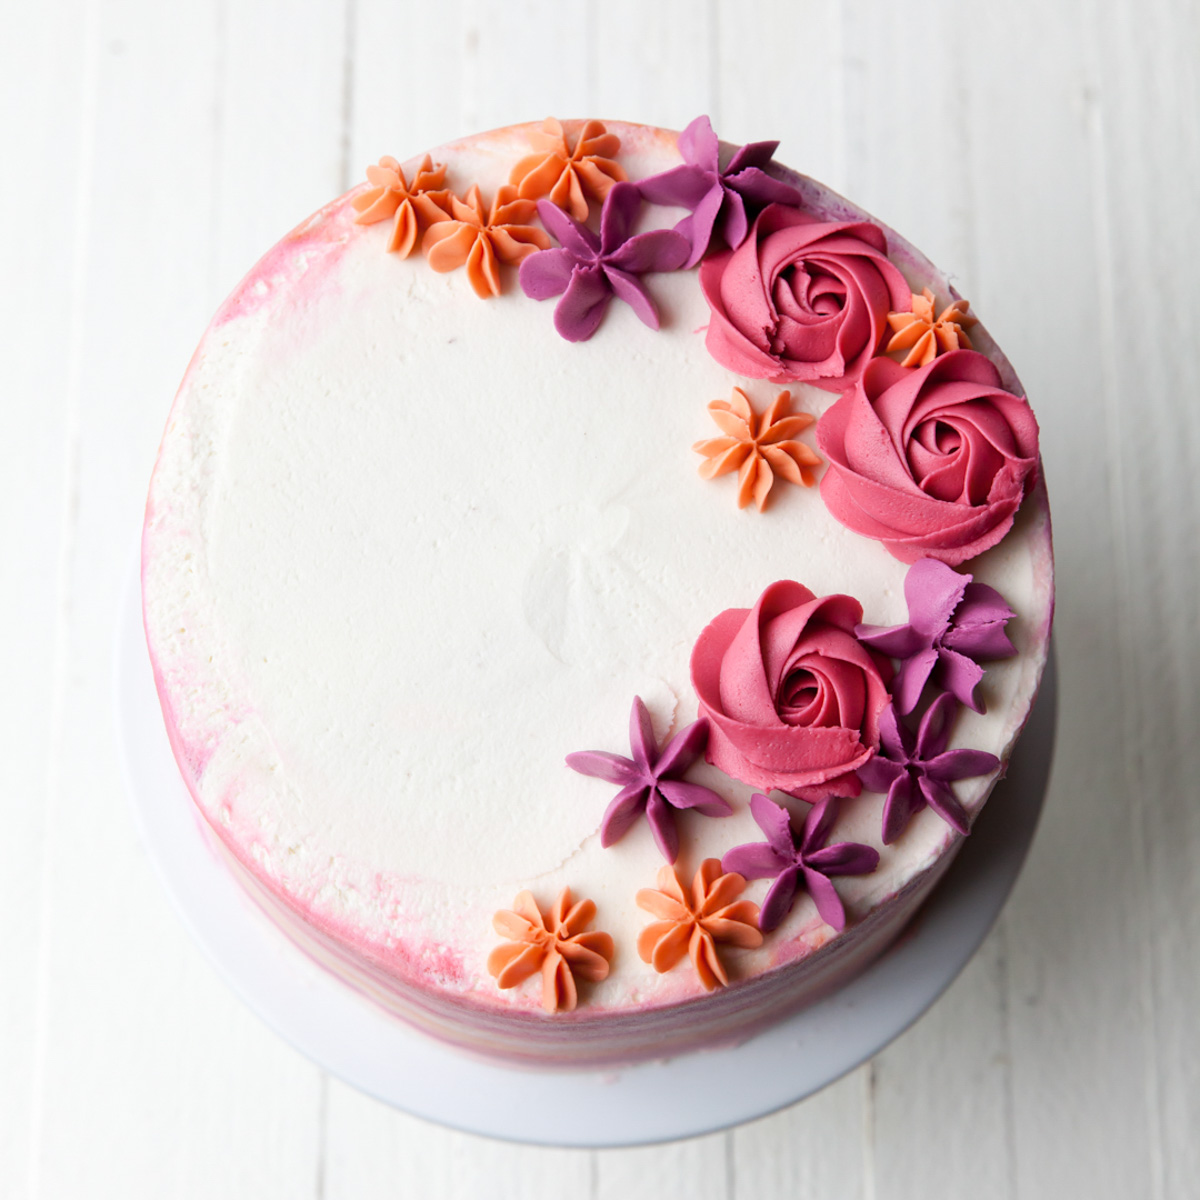 How to make a buttercream flower cake